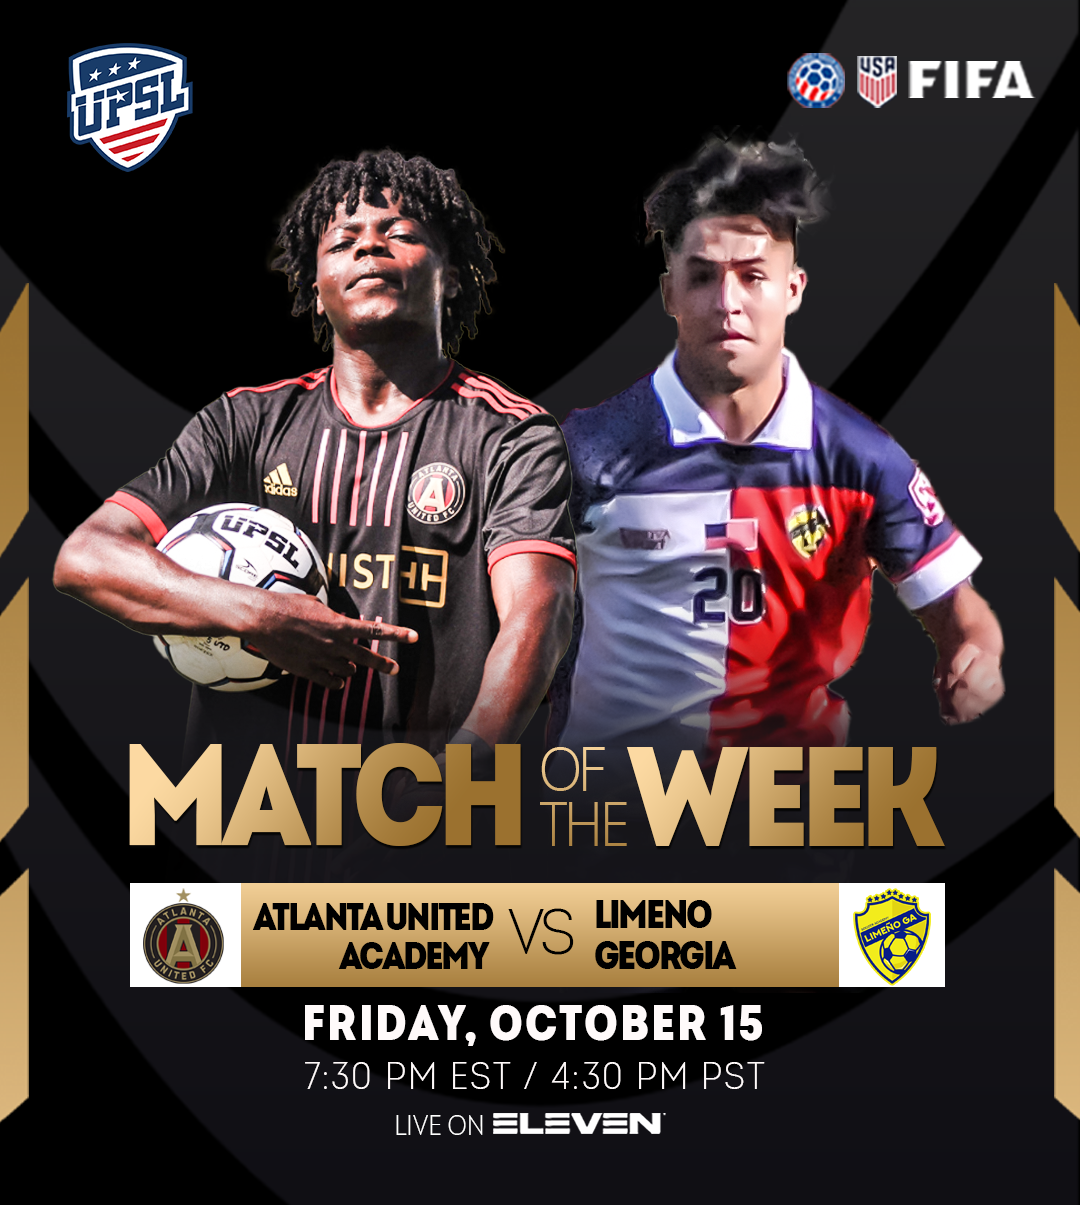 UPSL Match of the Week: Atlanta United Academy vs. Limeno Georgia